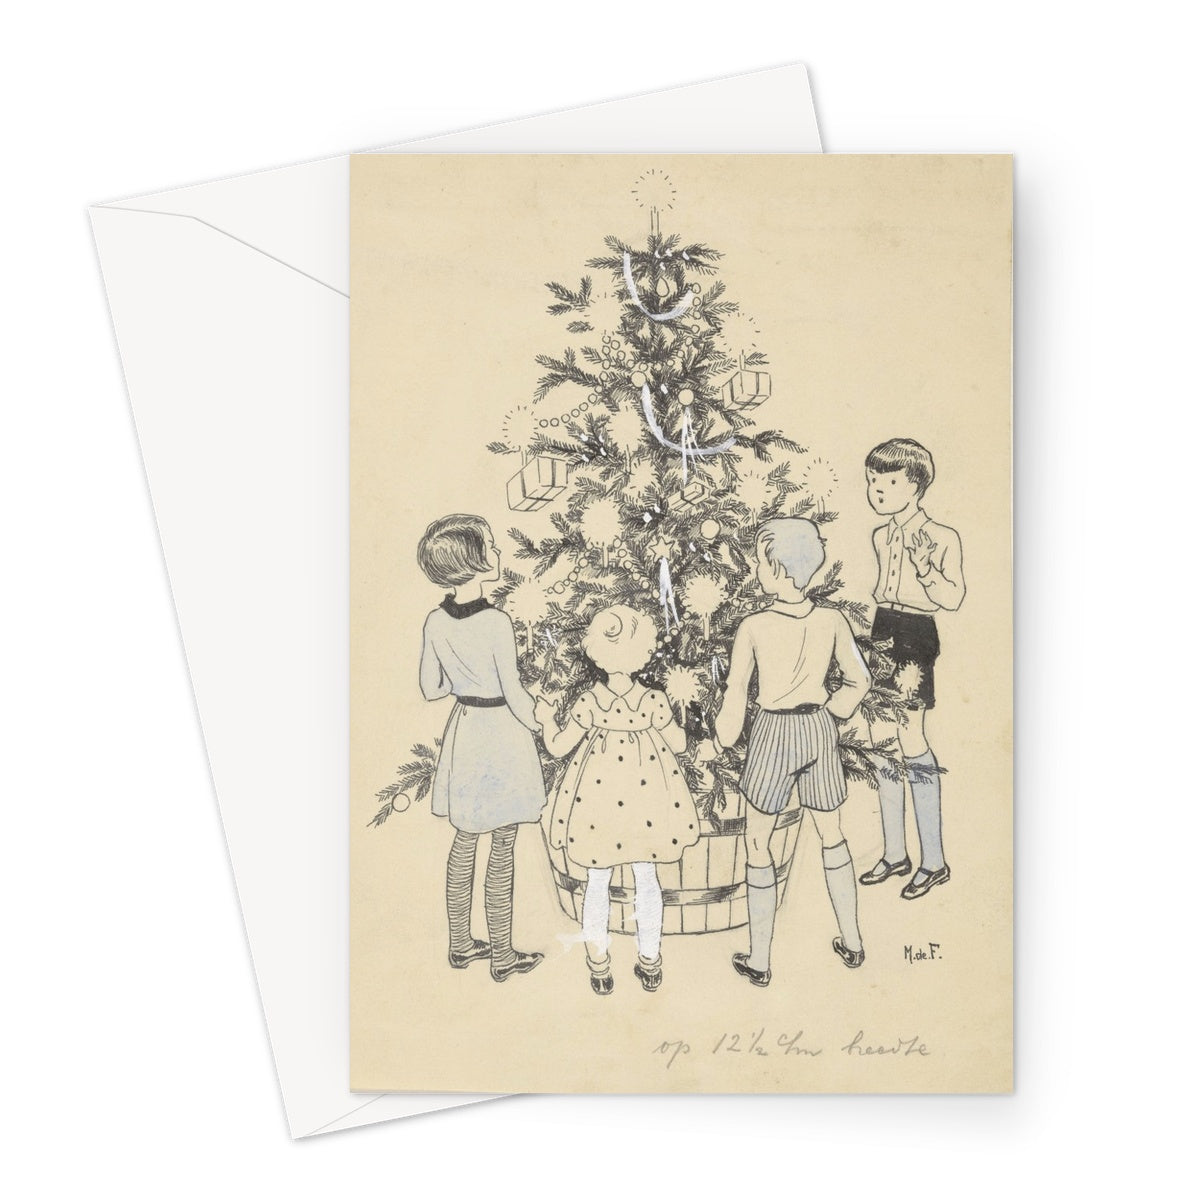 Four Children Around a Christmas Tree by Miep de Feijter, c. 1928 - c. 1941.